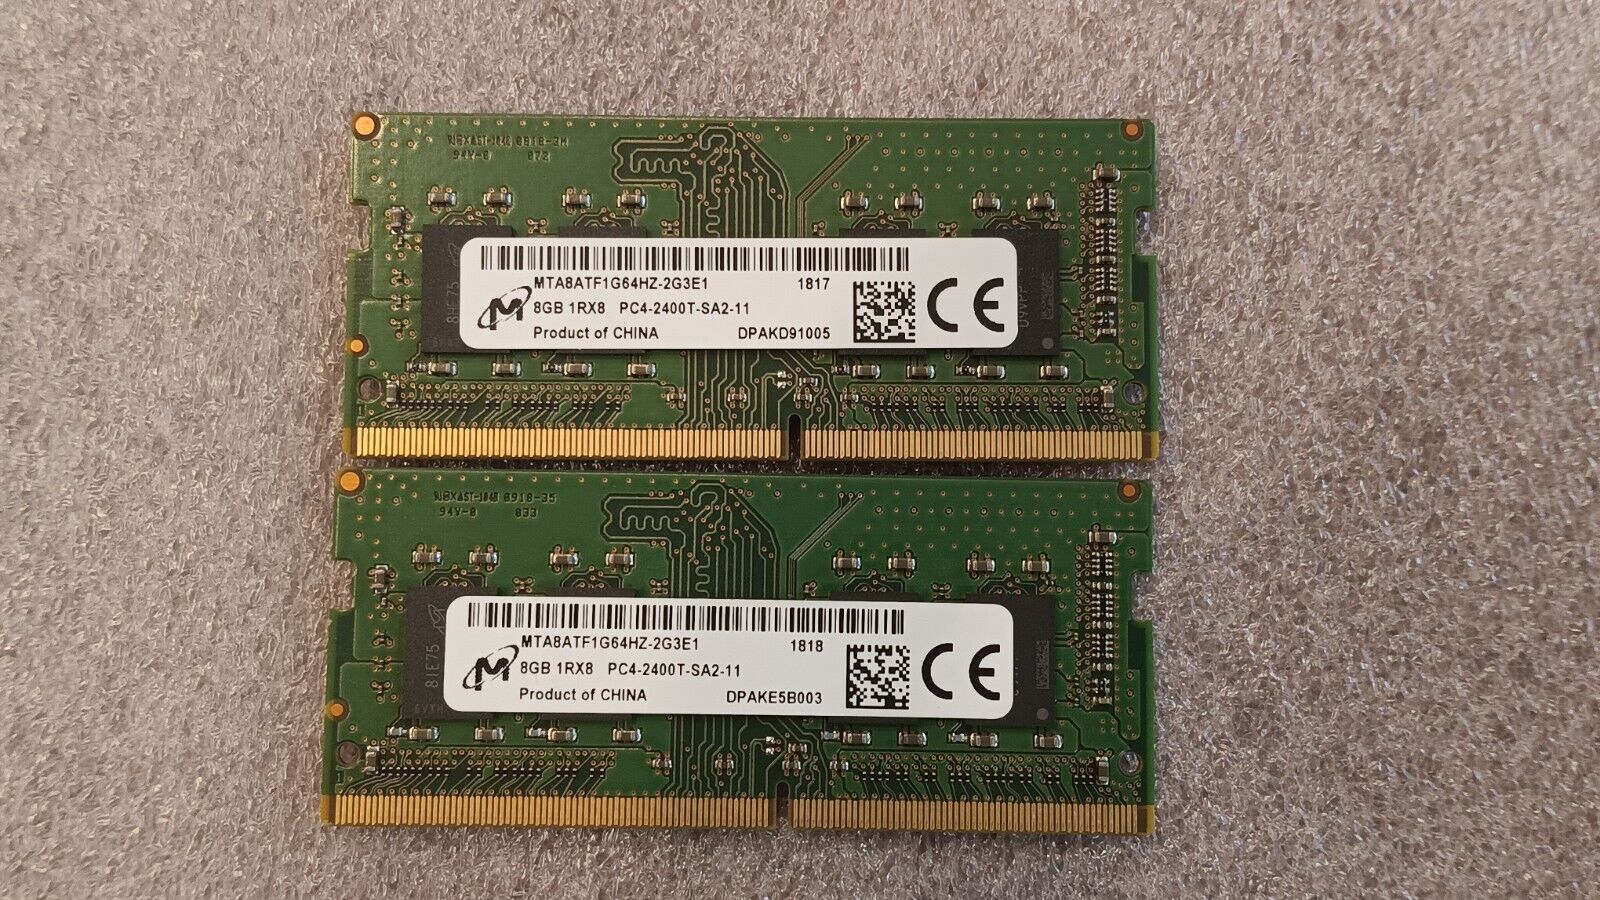 LOT 2x 8GB (16GB) Micron MTA8ATF1G64HZ-2G3E1 PC4-2400T SODIMM Laptop RAM